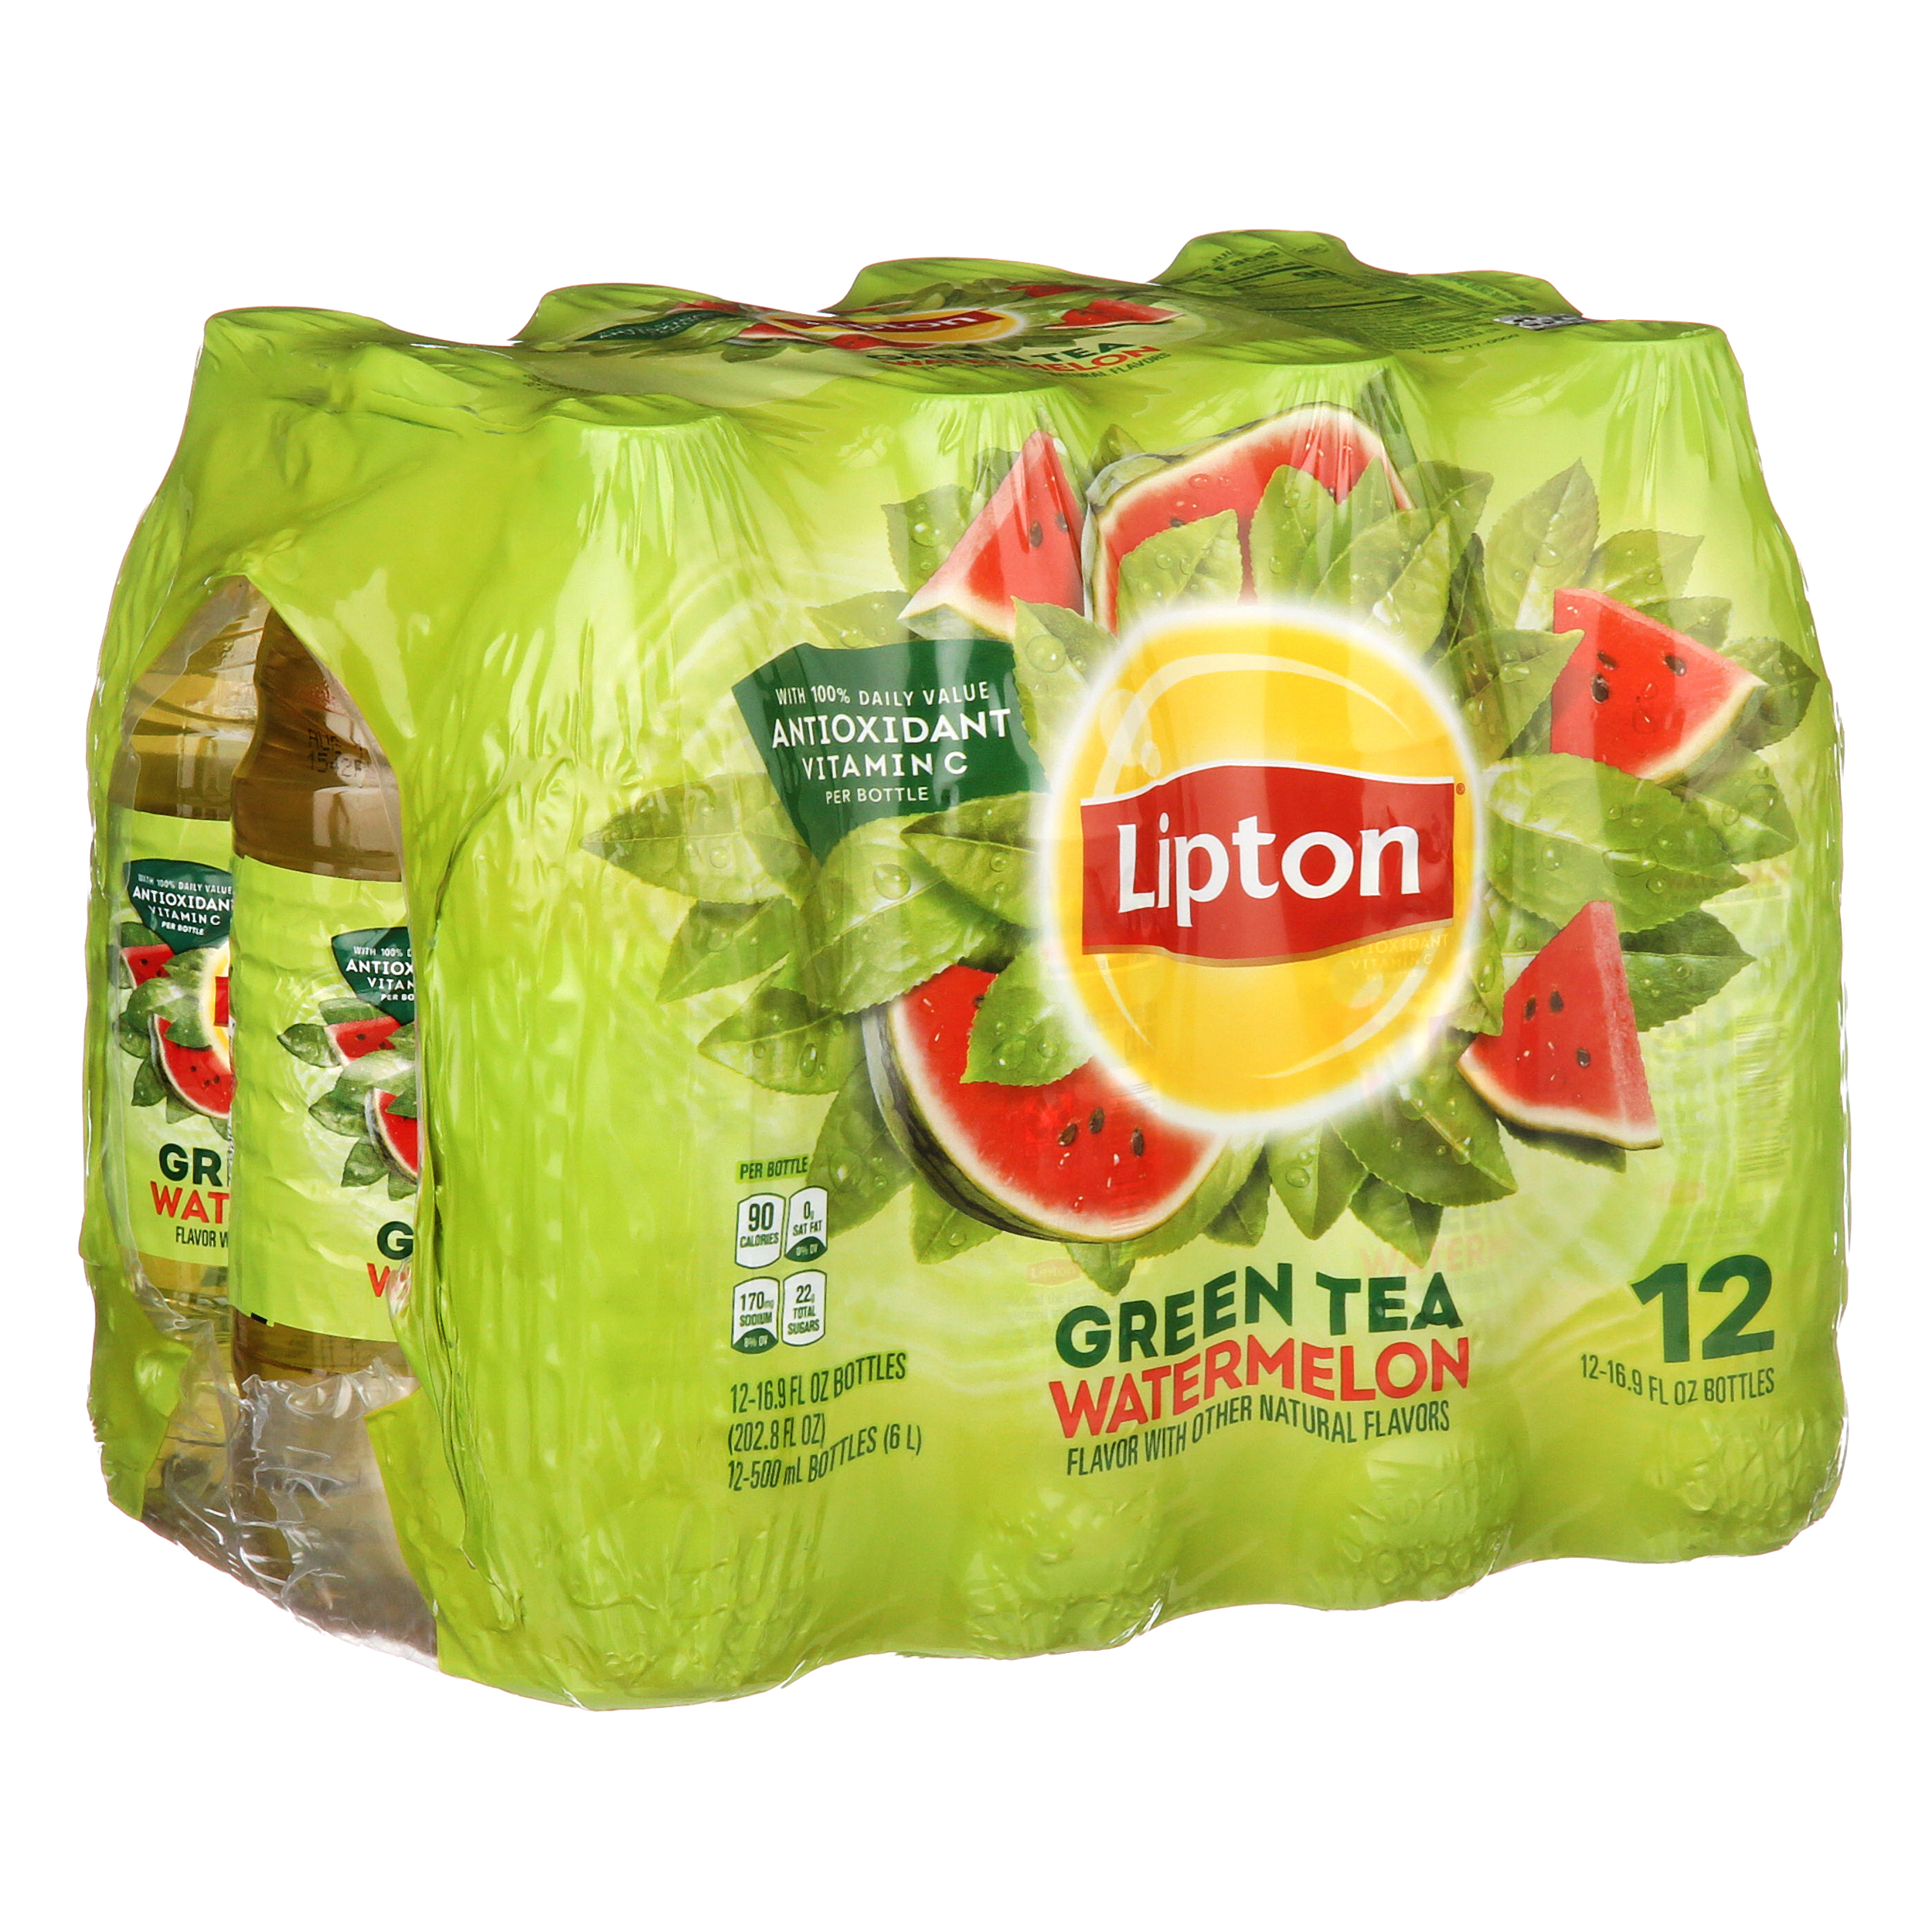 Lipton Green Tea Watermelon Iced Tea, Bottled Tea Drink, 16.9 fl oz 12 Pack Bottle - image 5 of 9